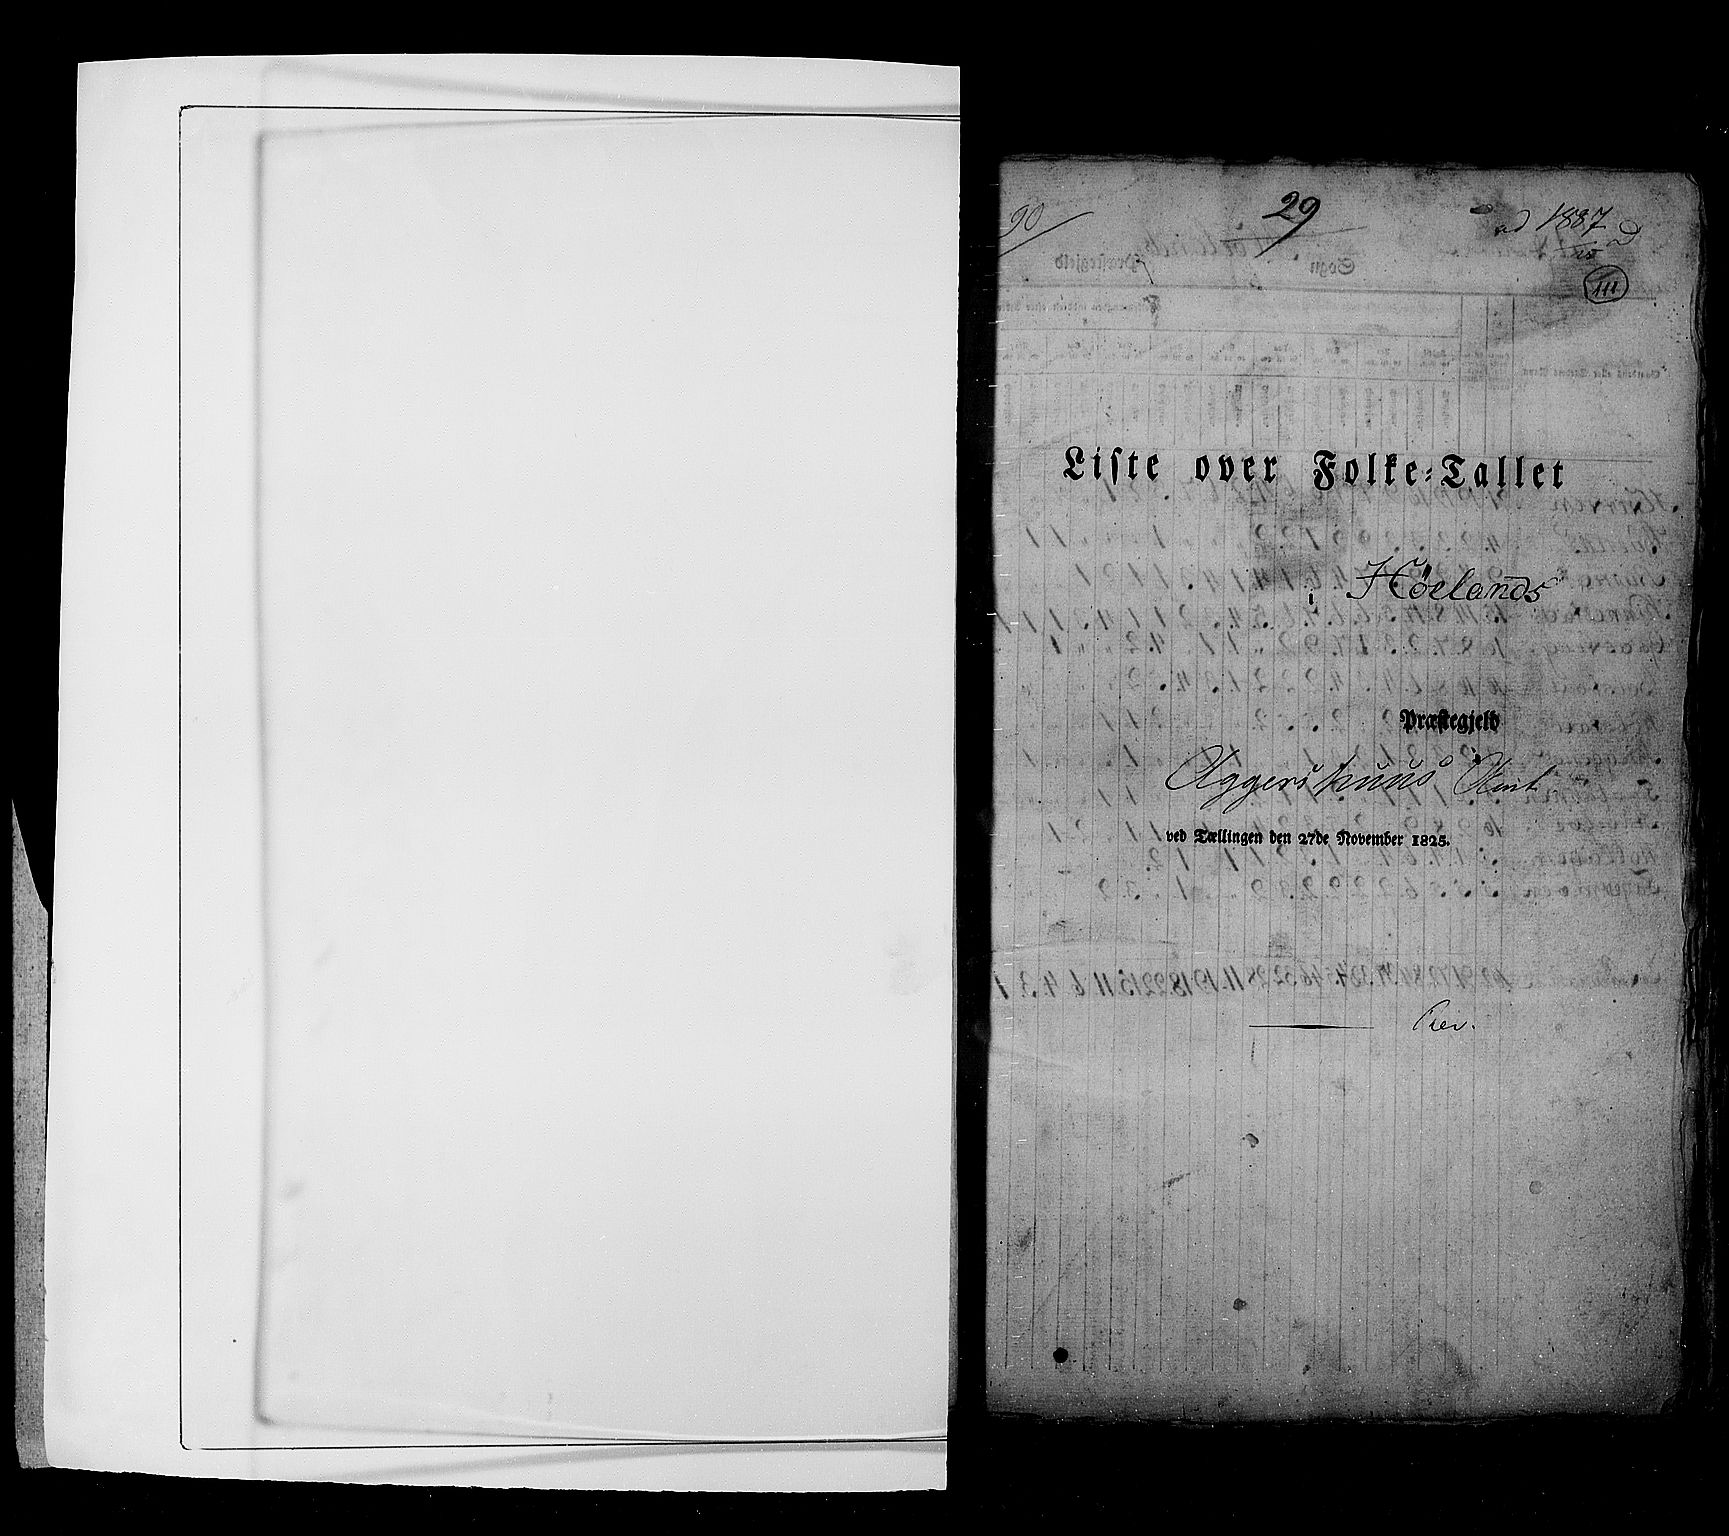 RA, Folketellingen 1825, bind 4: Akershus amt, 1825, s. 111